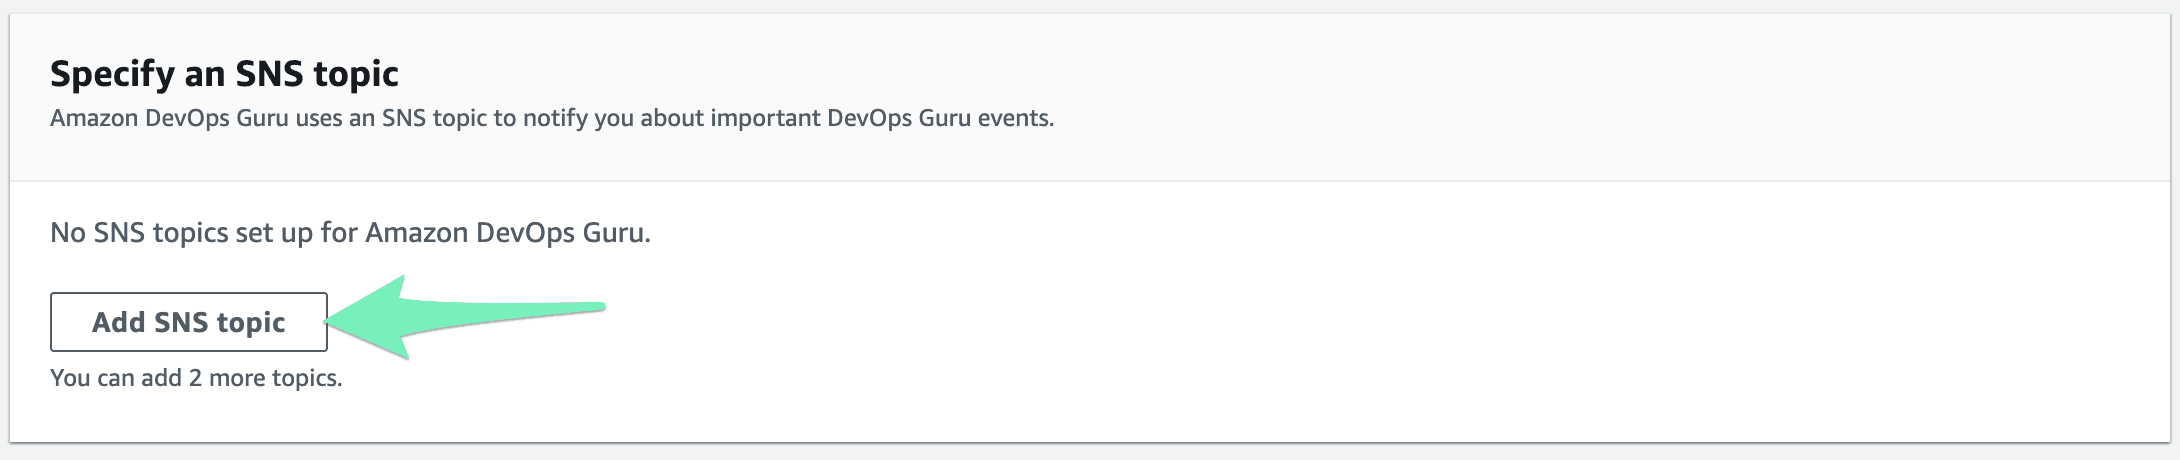 Amazon DevOps Guru Notification Setup: Step 2